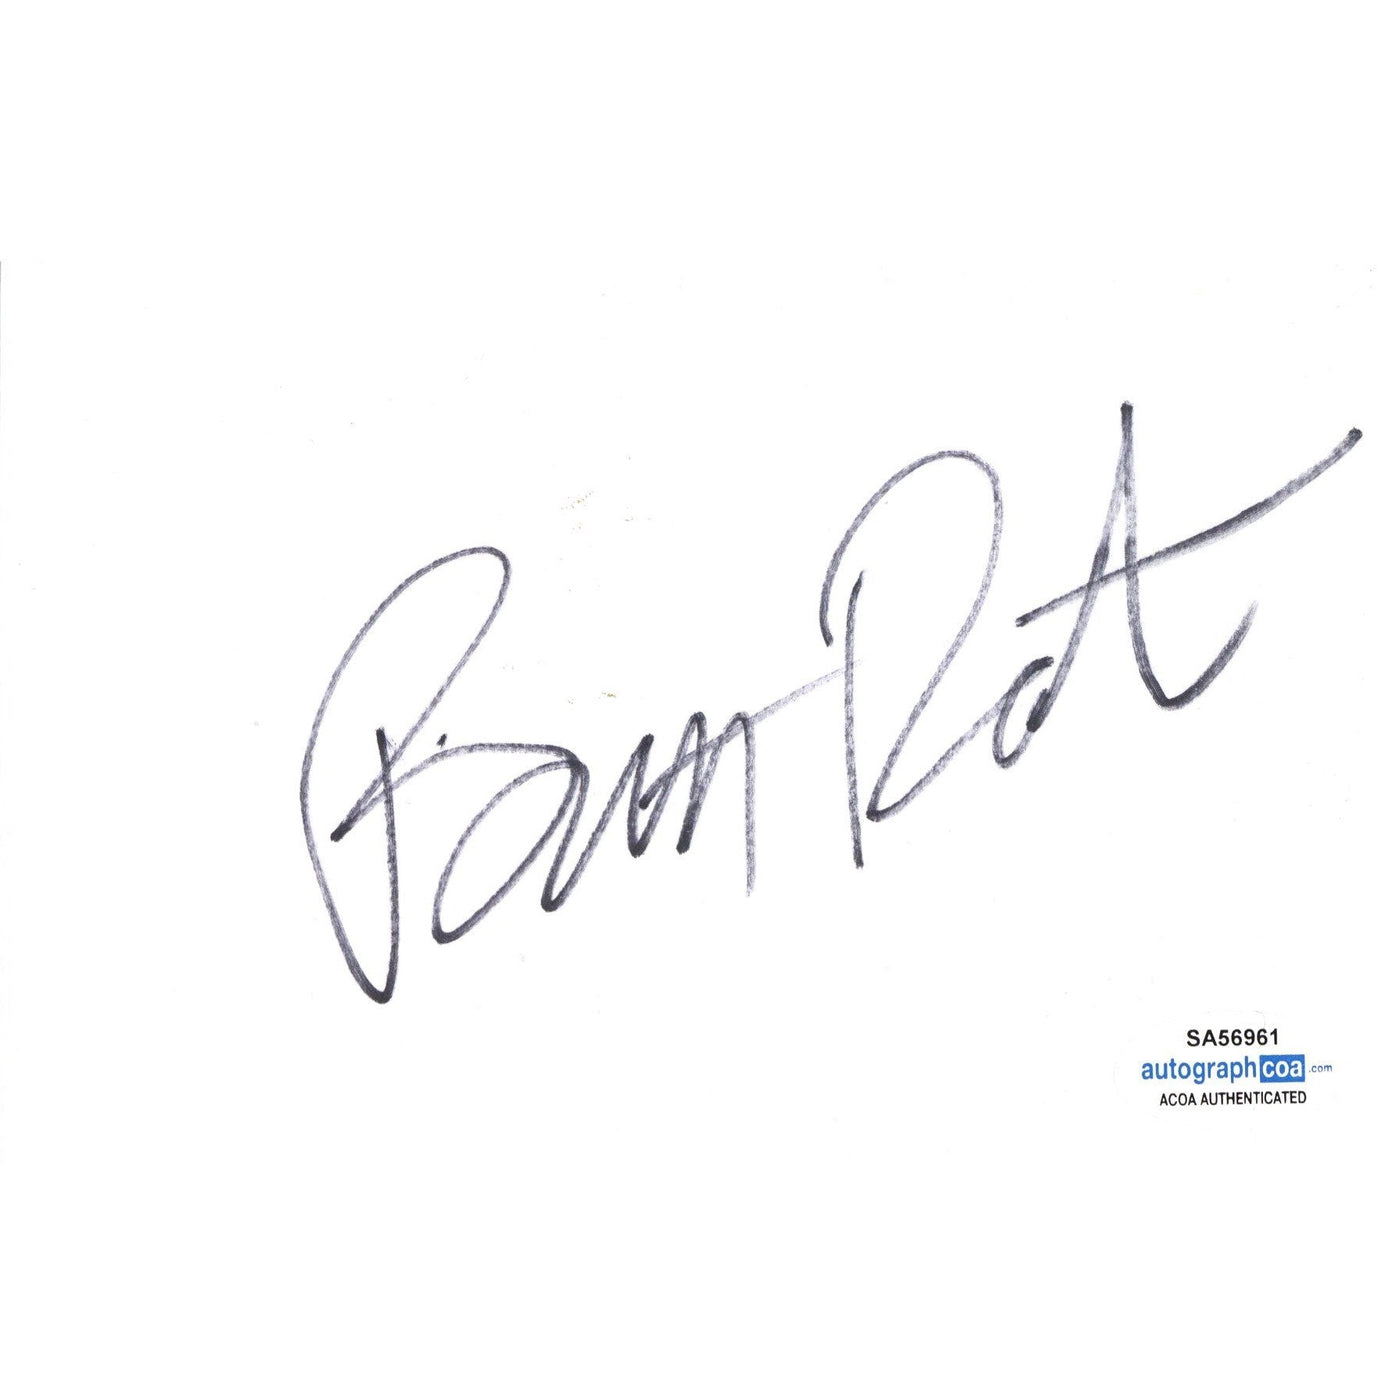 BRETT RATNER Signed Index Card Writer & Director X-MEN Autographed ACOA